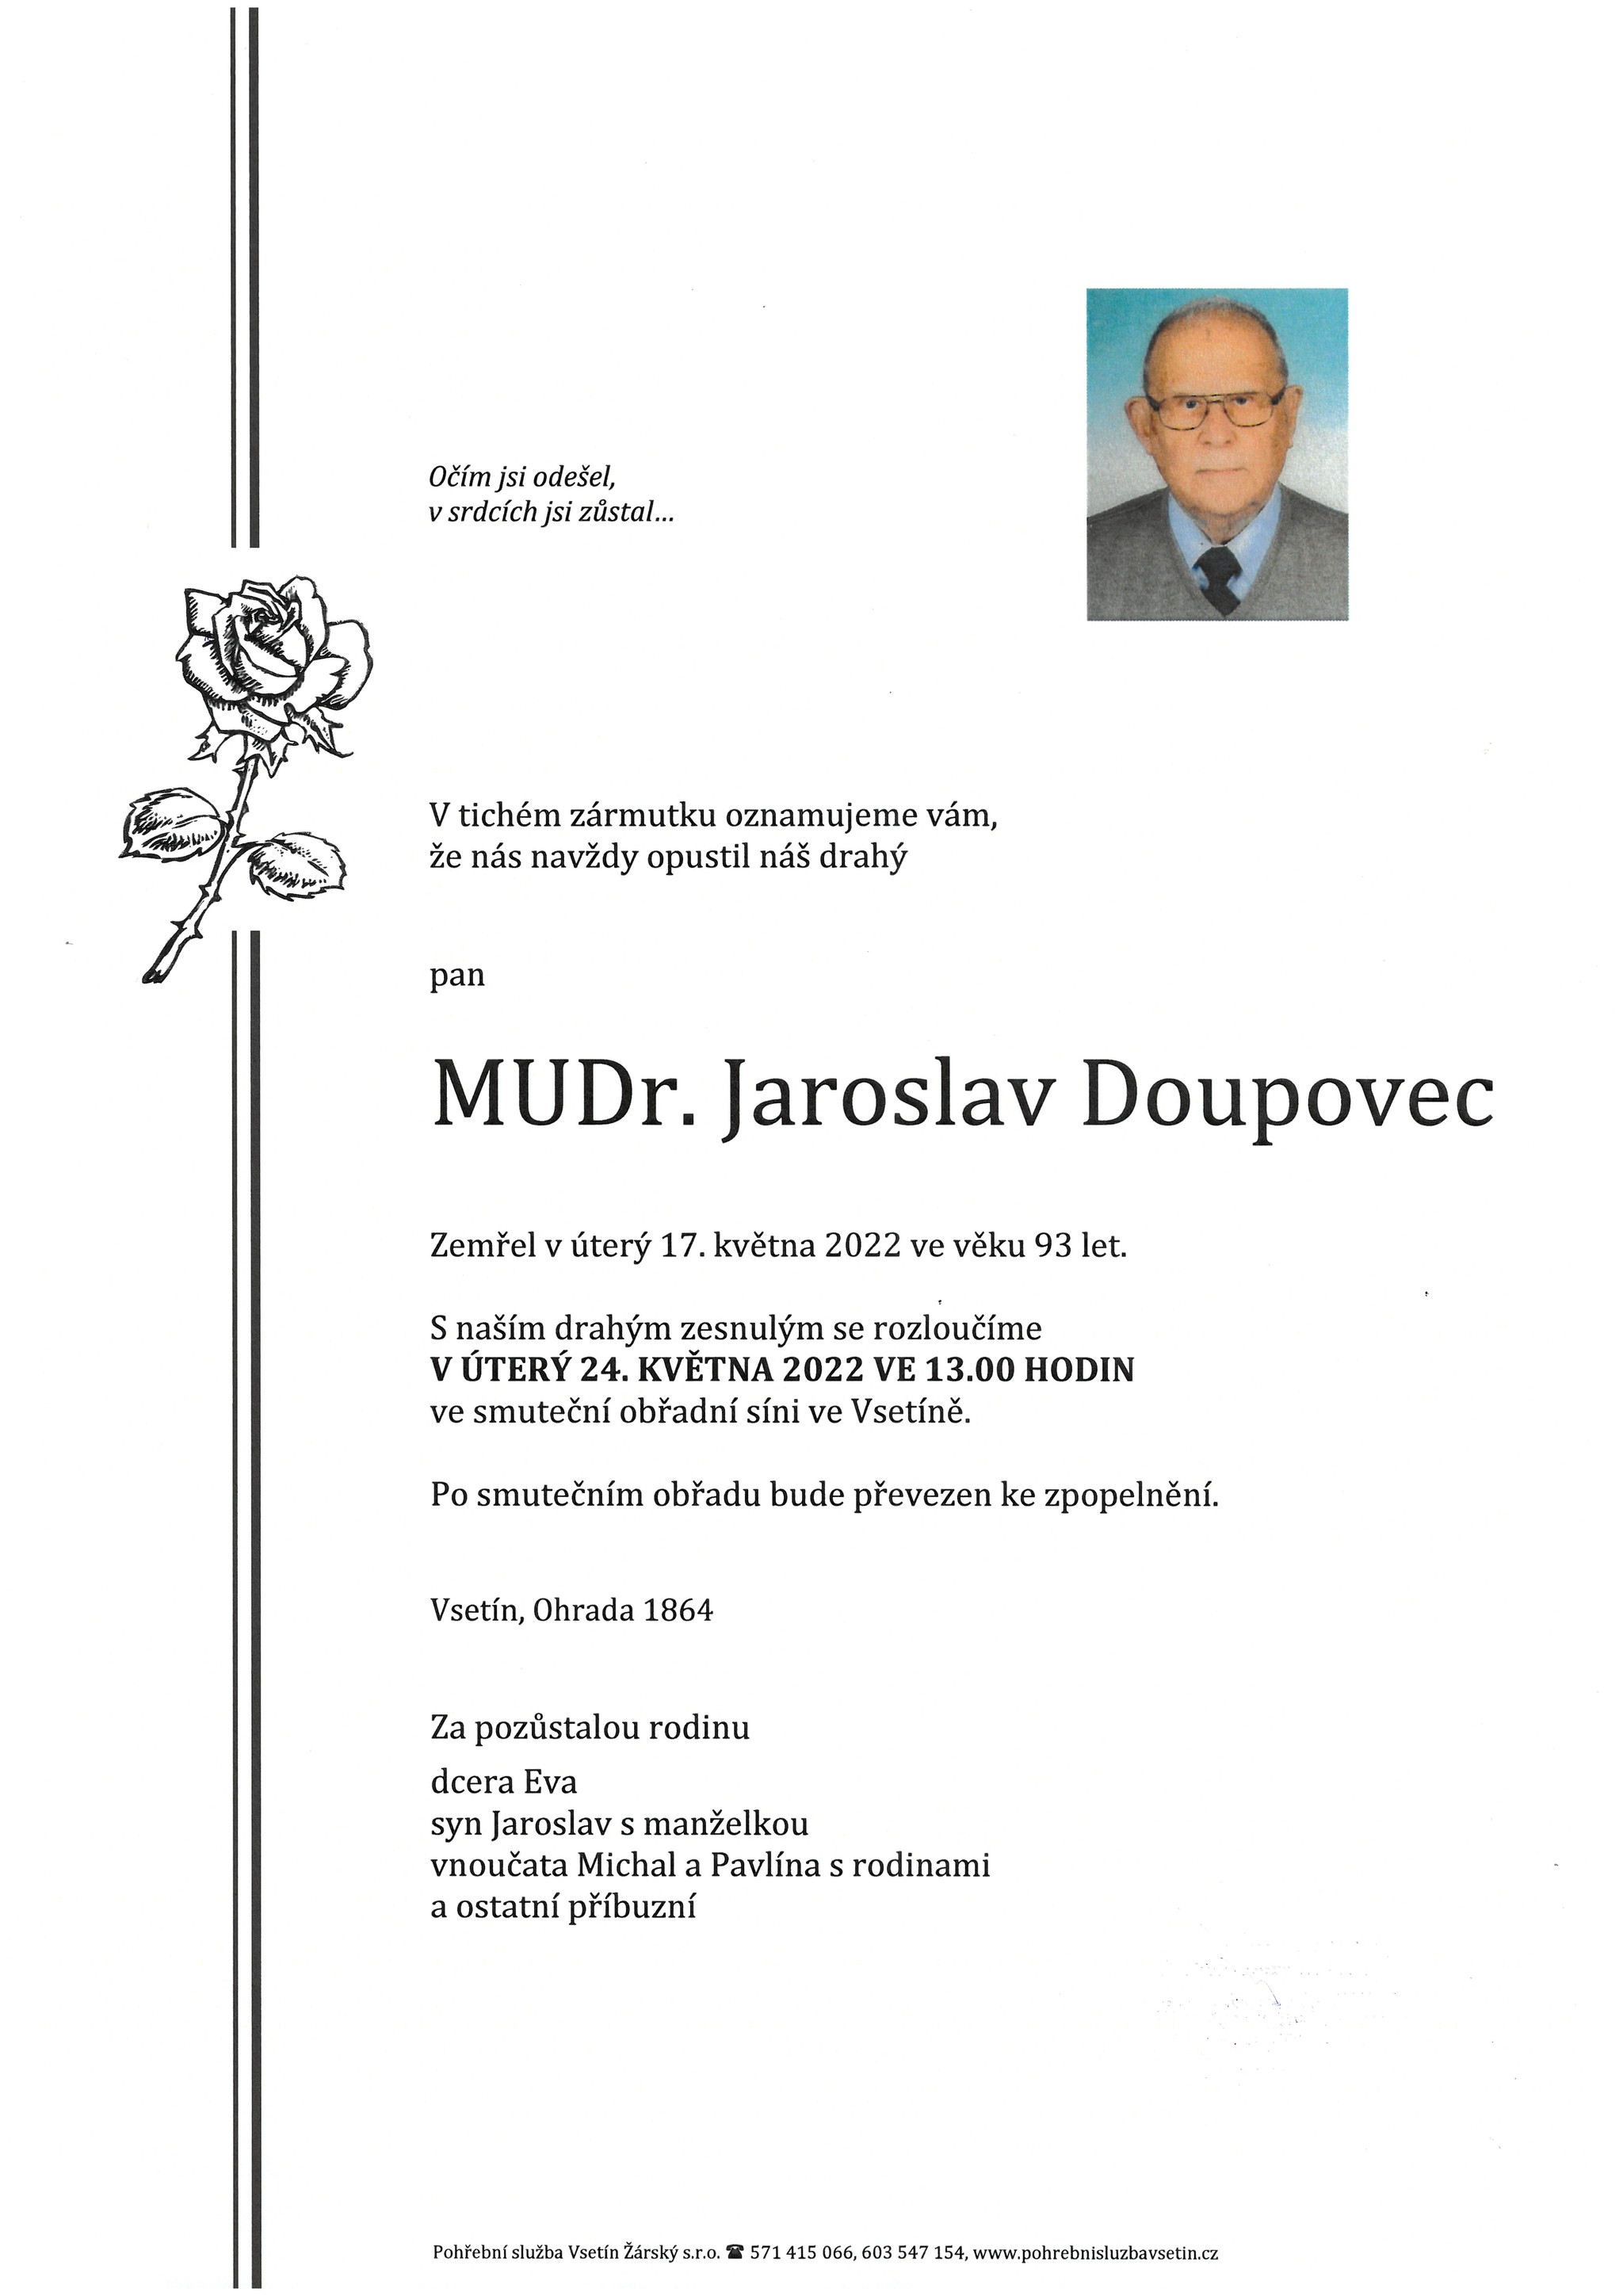 MUDr. Jaroslav Doupovec